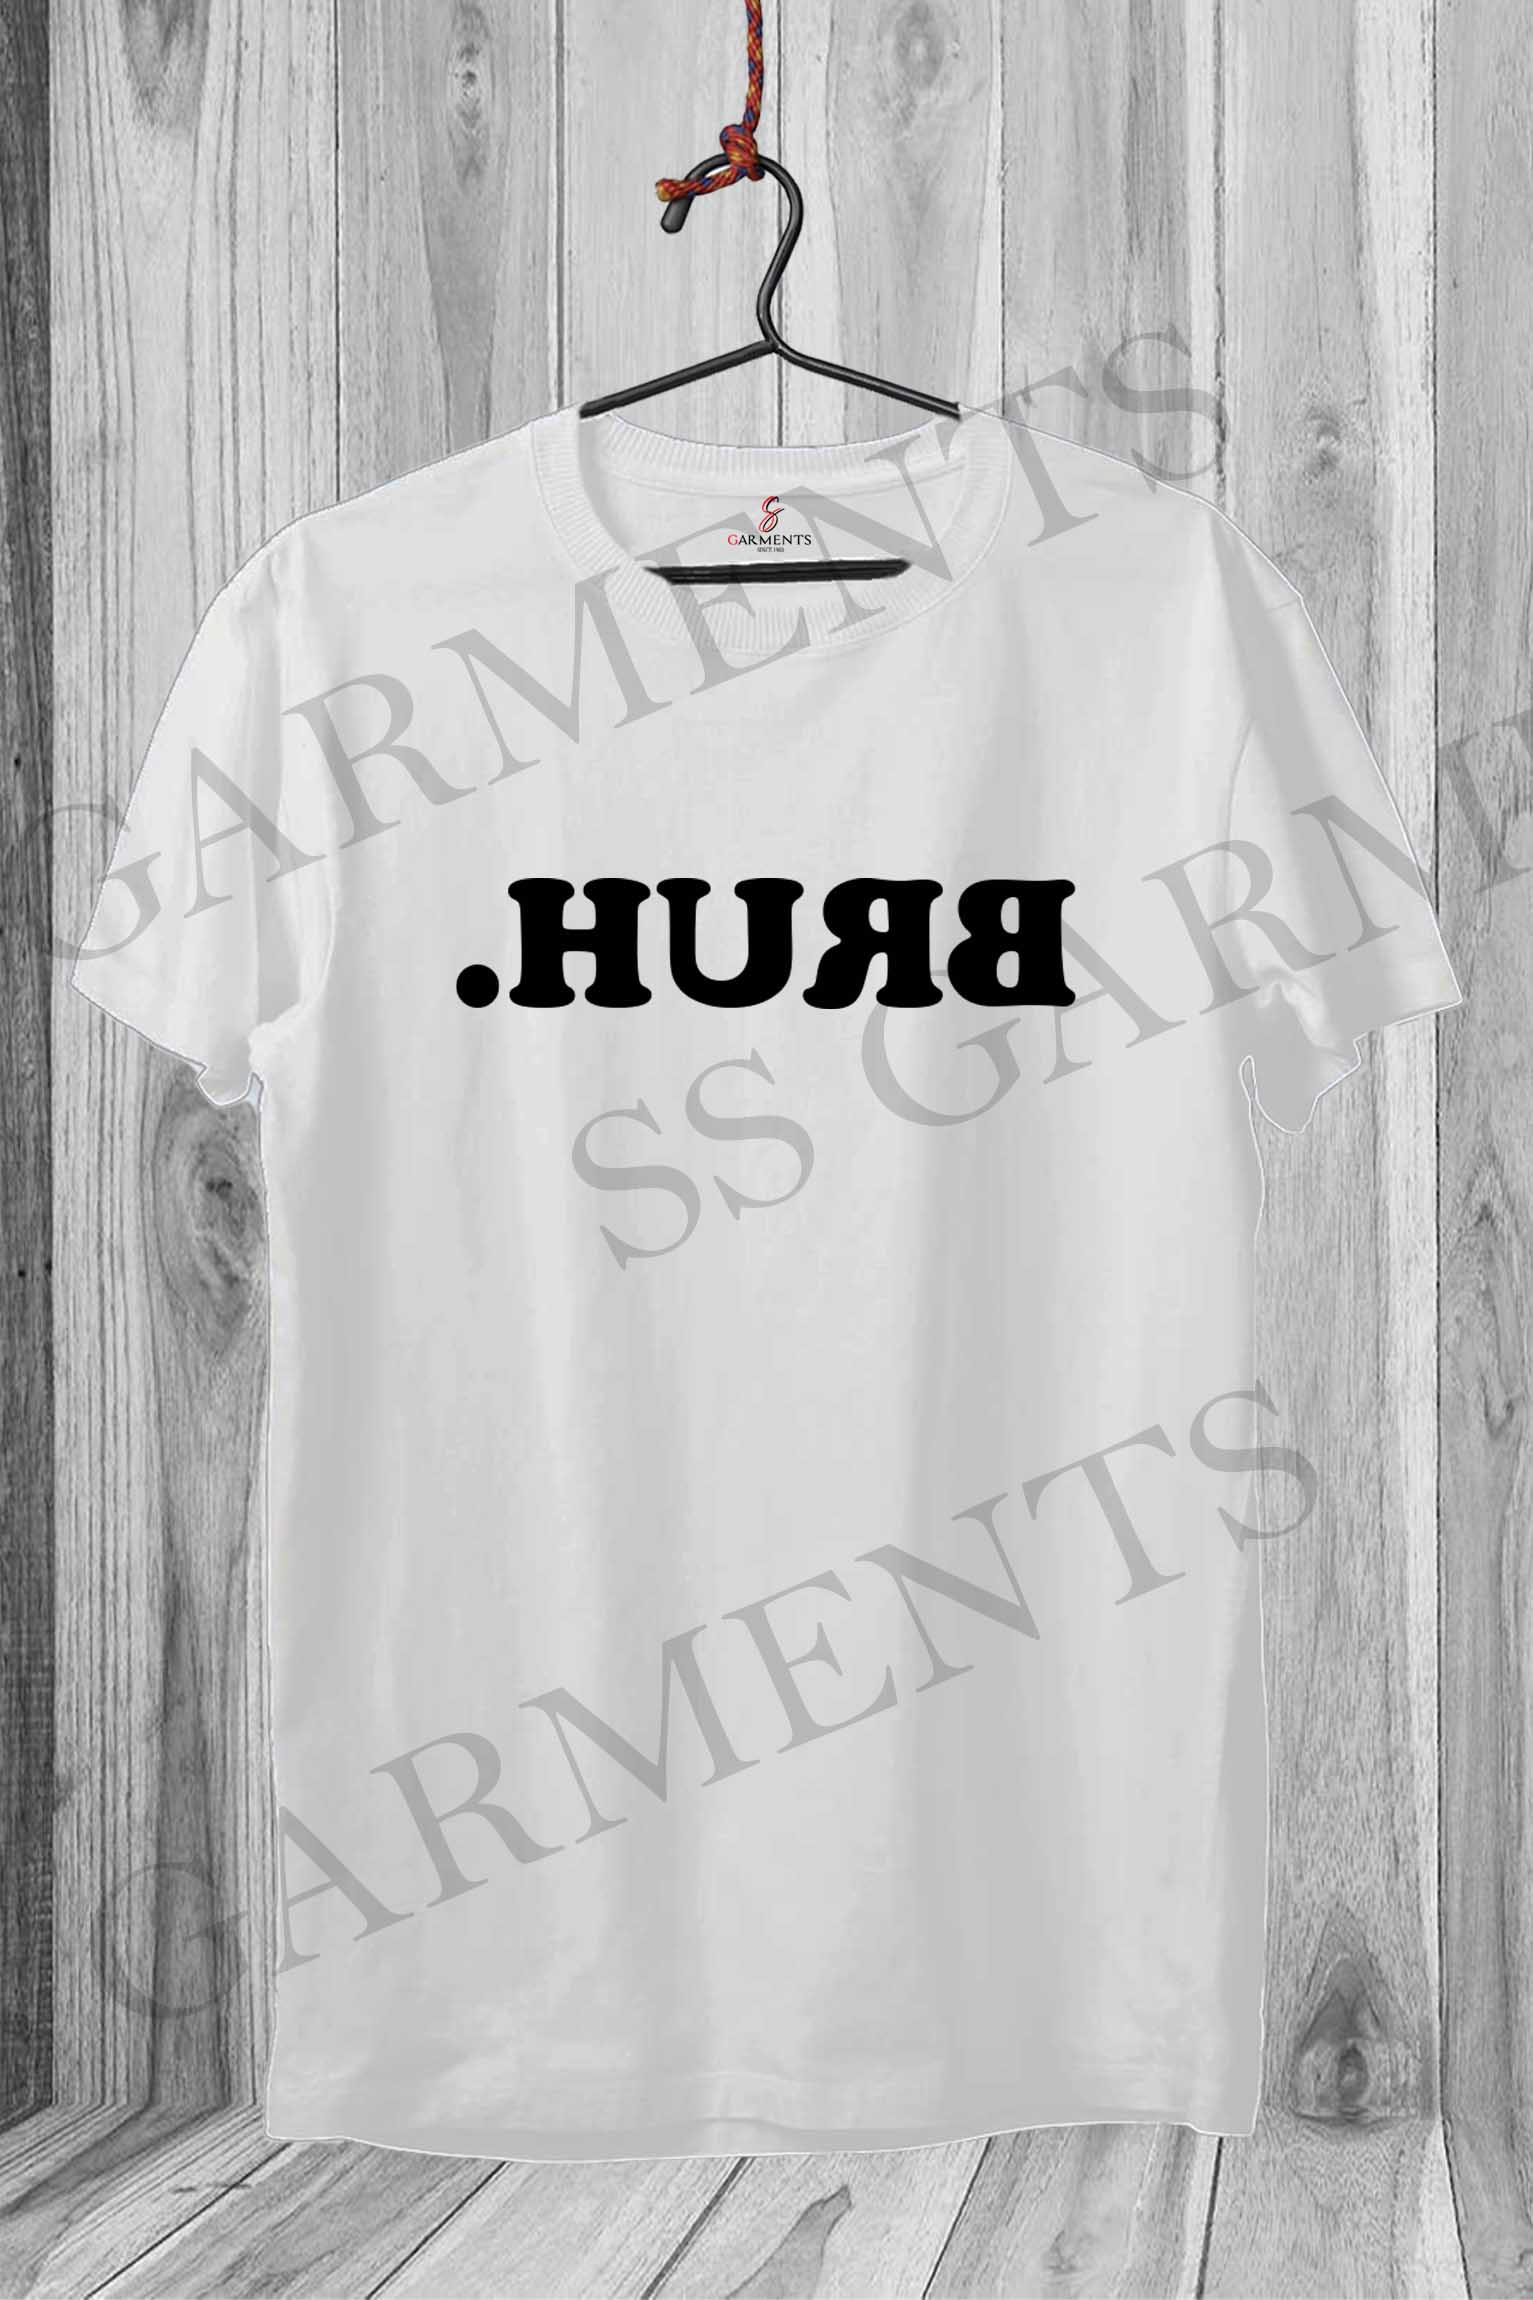 Round Neck Hurb (Bruh Backwards) Printed T-shirt